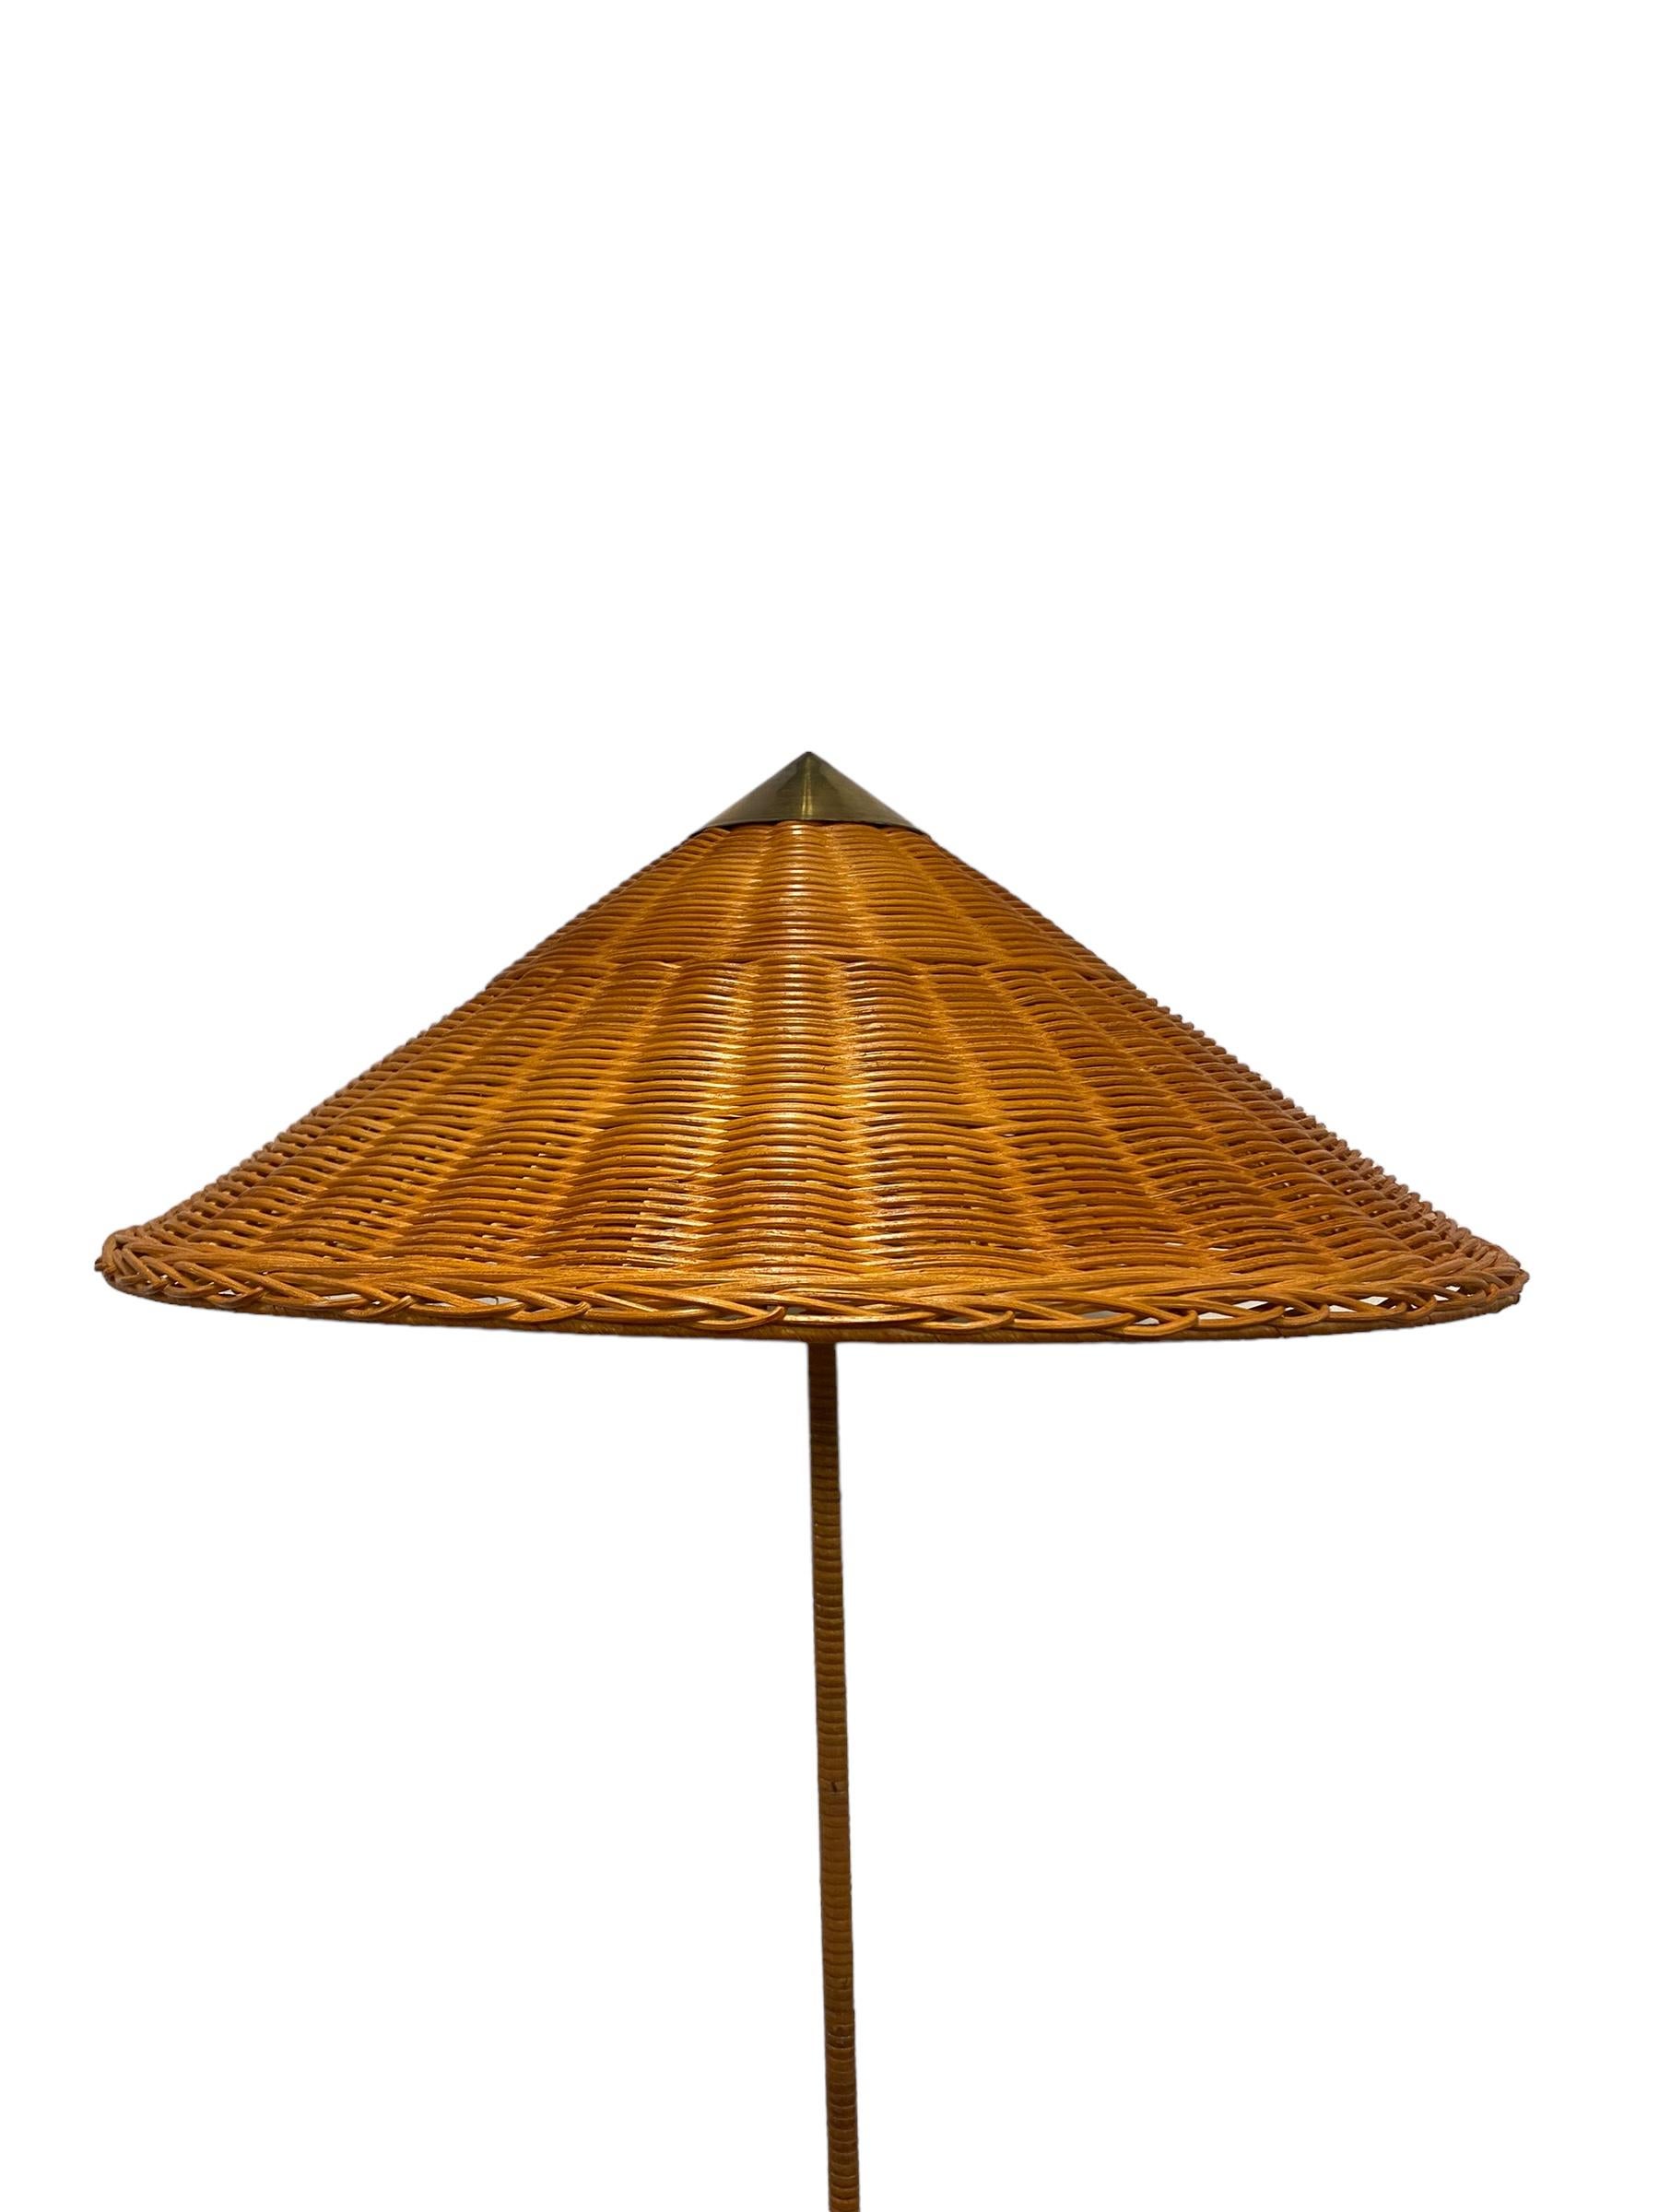 Finnish Paavo Tynell `Chinese Hat` Floor Lamp Model 9602, Idman 1950s